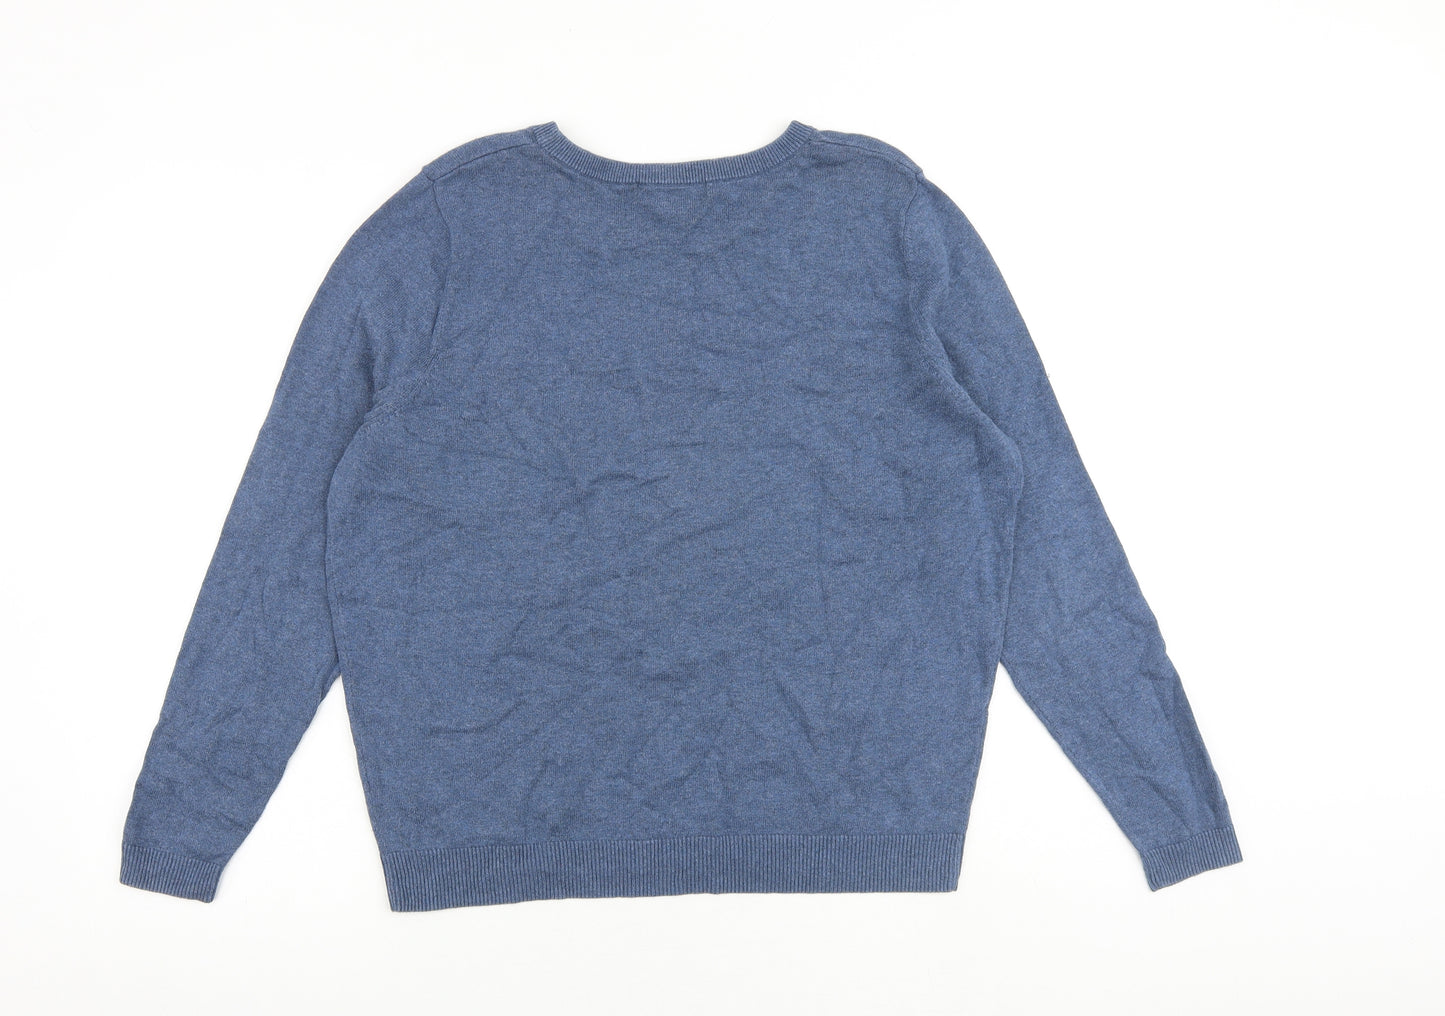 Dickins & Jones Womens Blue Round Neck 100% Cotton Pullover Jumper Size M